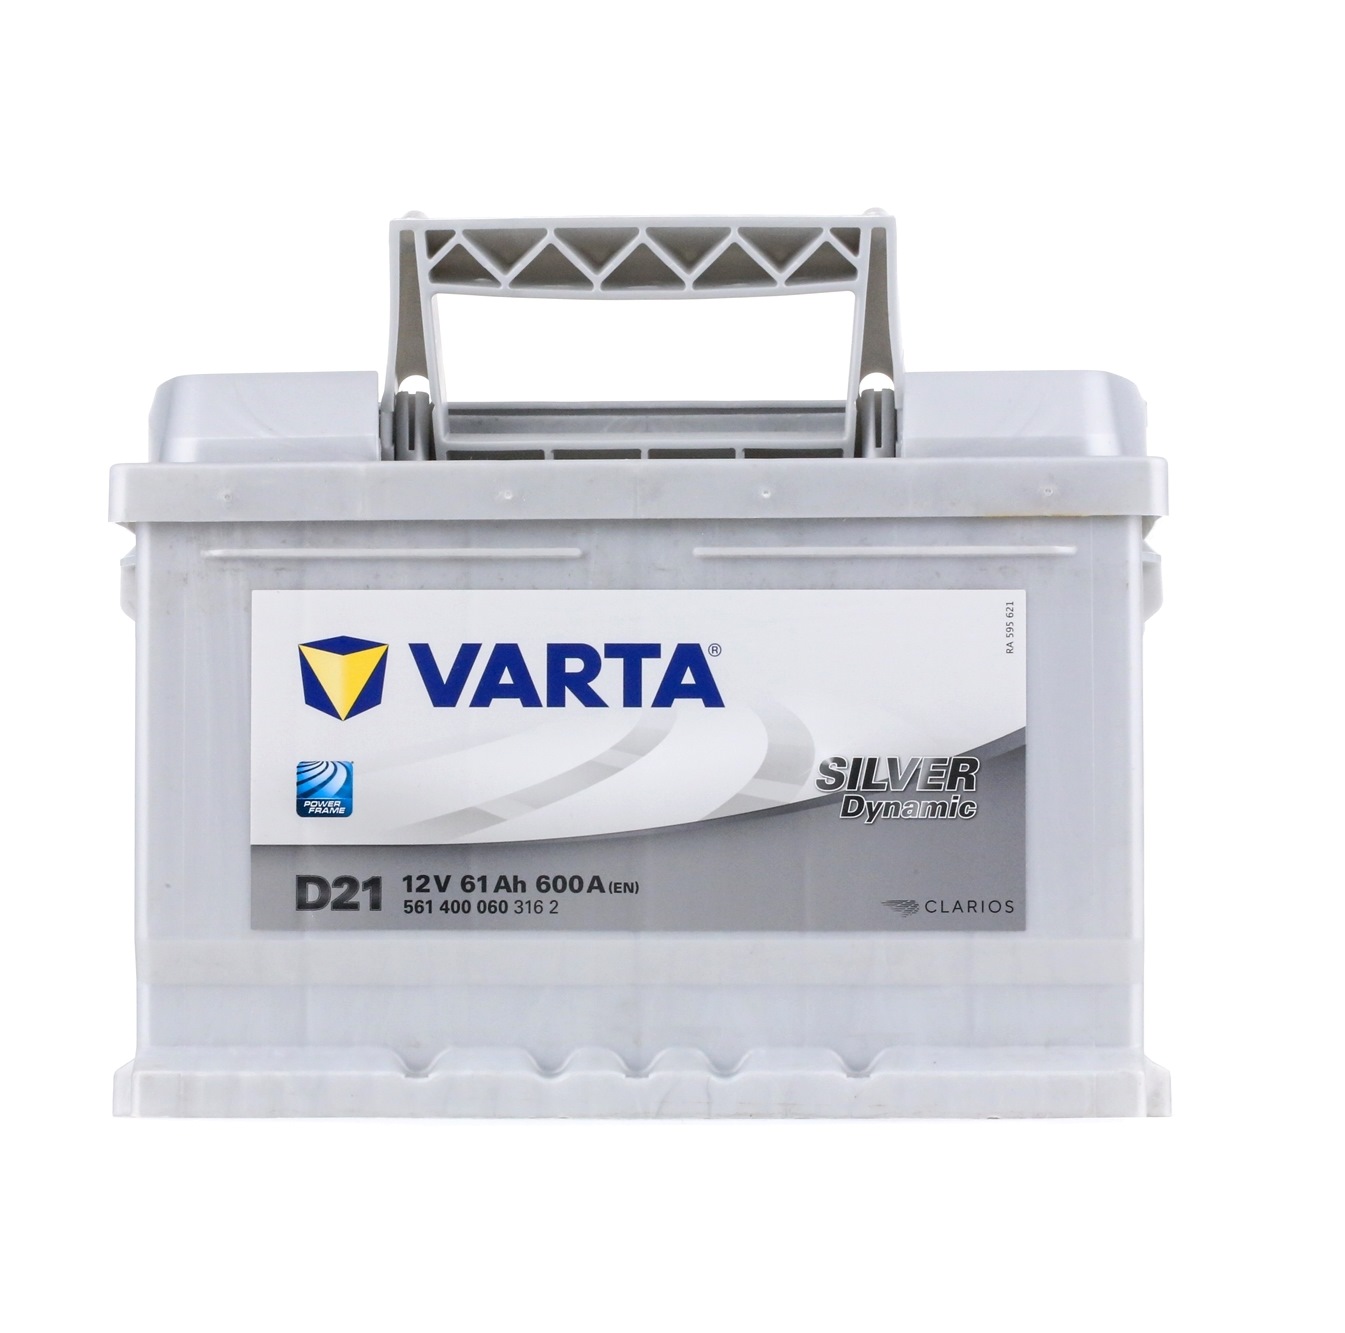 VARTA SILVER dynamic, D21 5614000603162 Autobatterie 12V 61Ah 600A B13 Bleiakkumulator